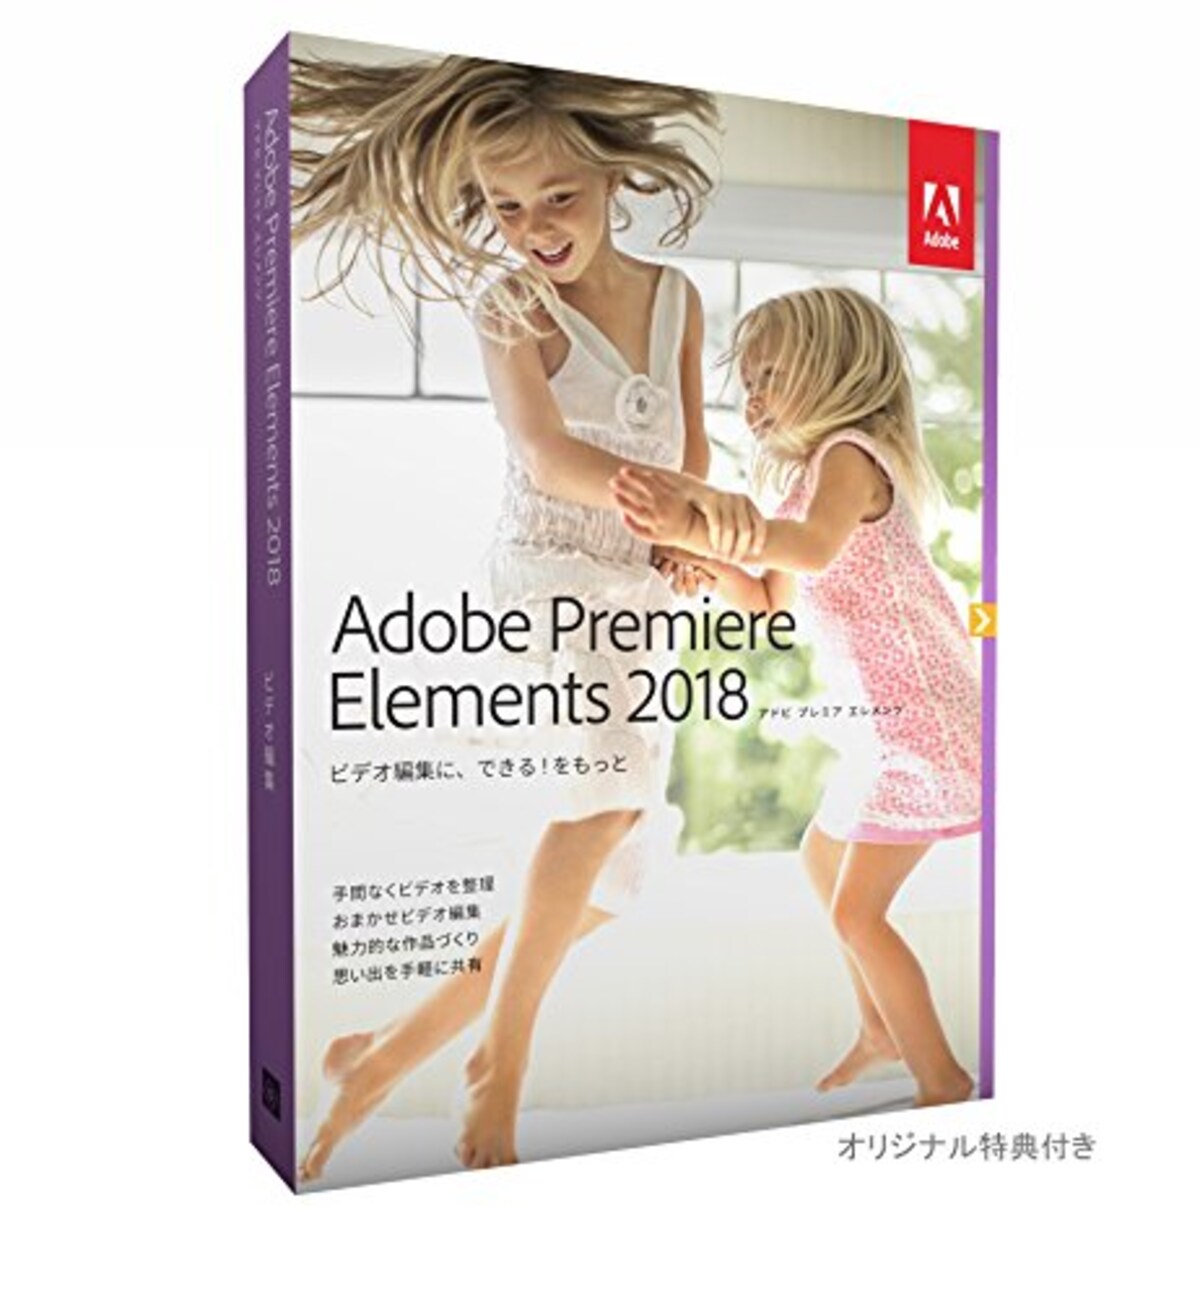 Adobe Premiere Elements 2020 パッケージ版 Windows/Mac対応